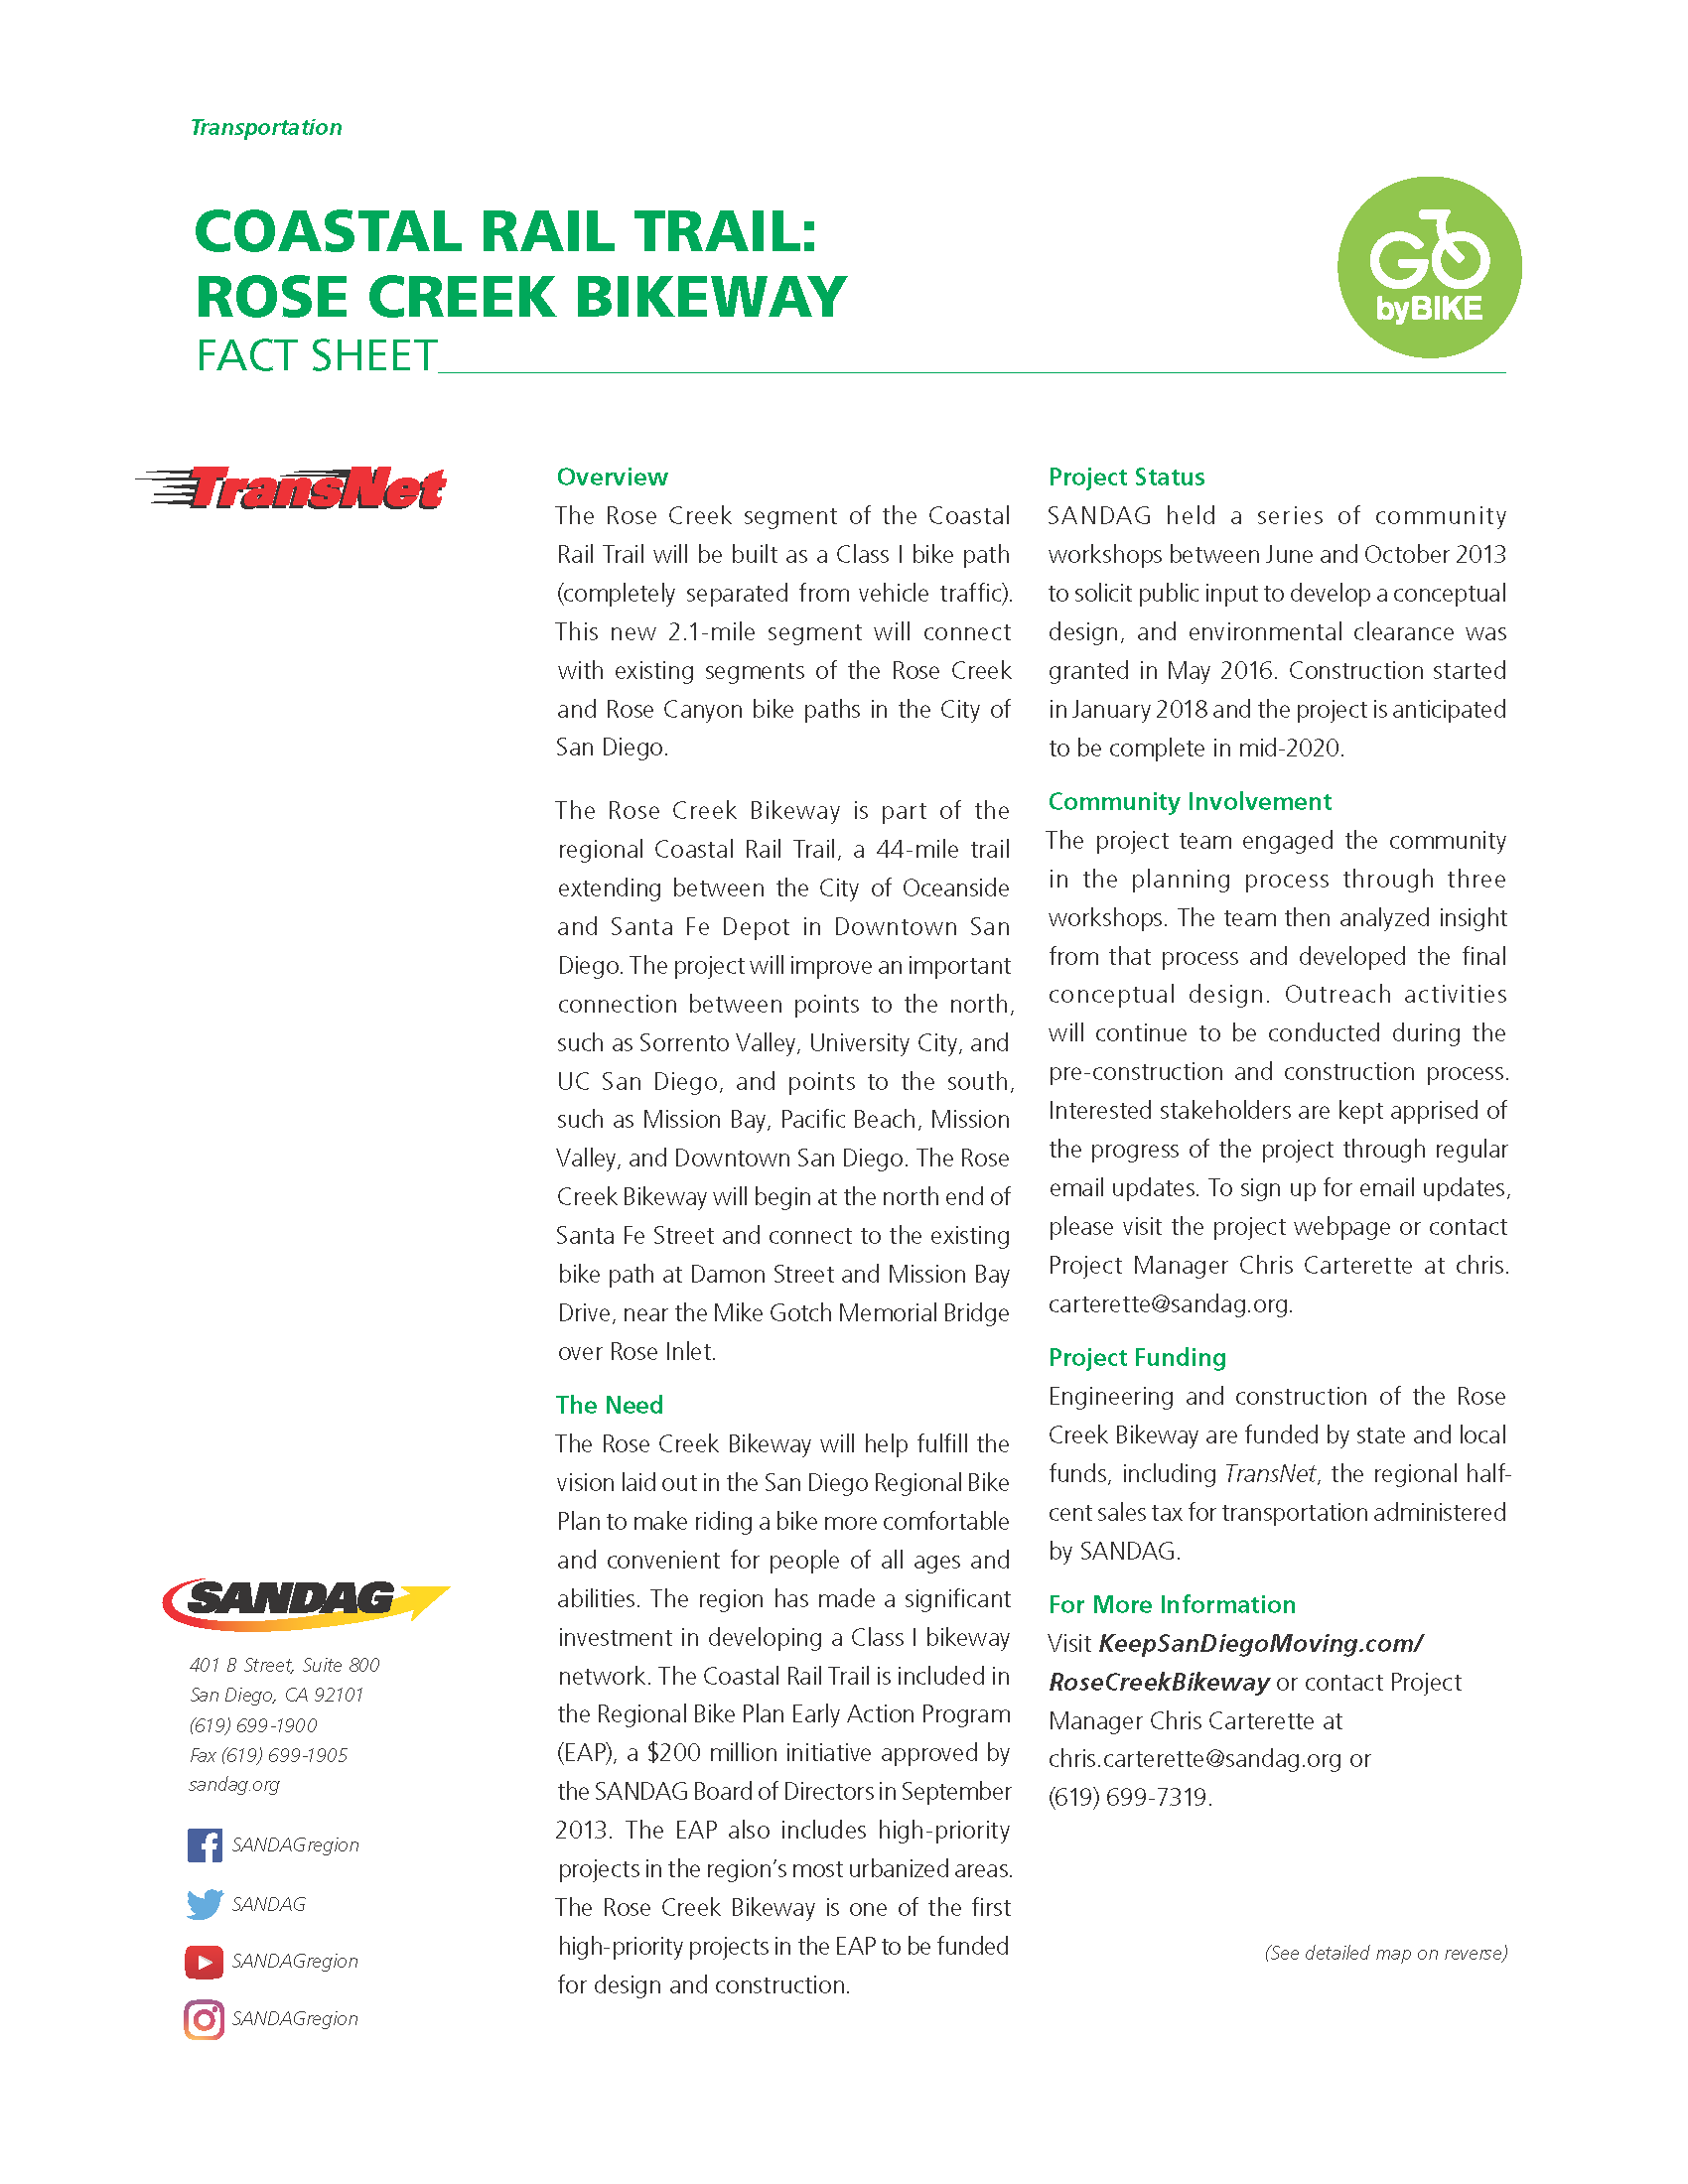 View the Rose Creek Bikeway project fact sheet in English.